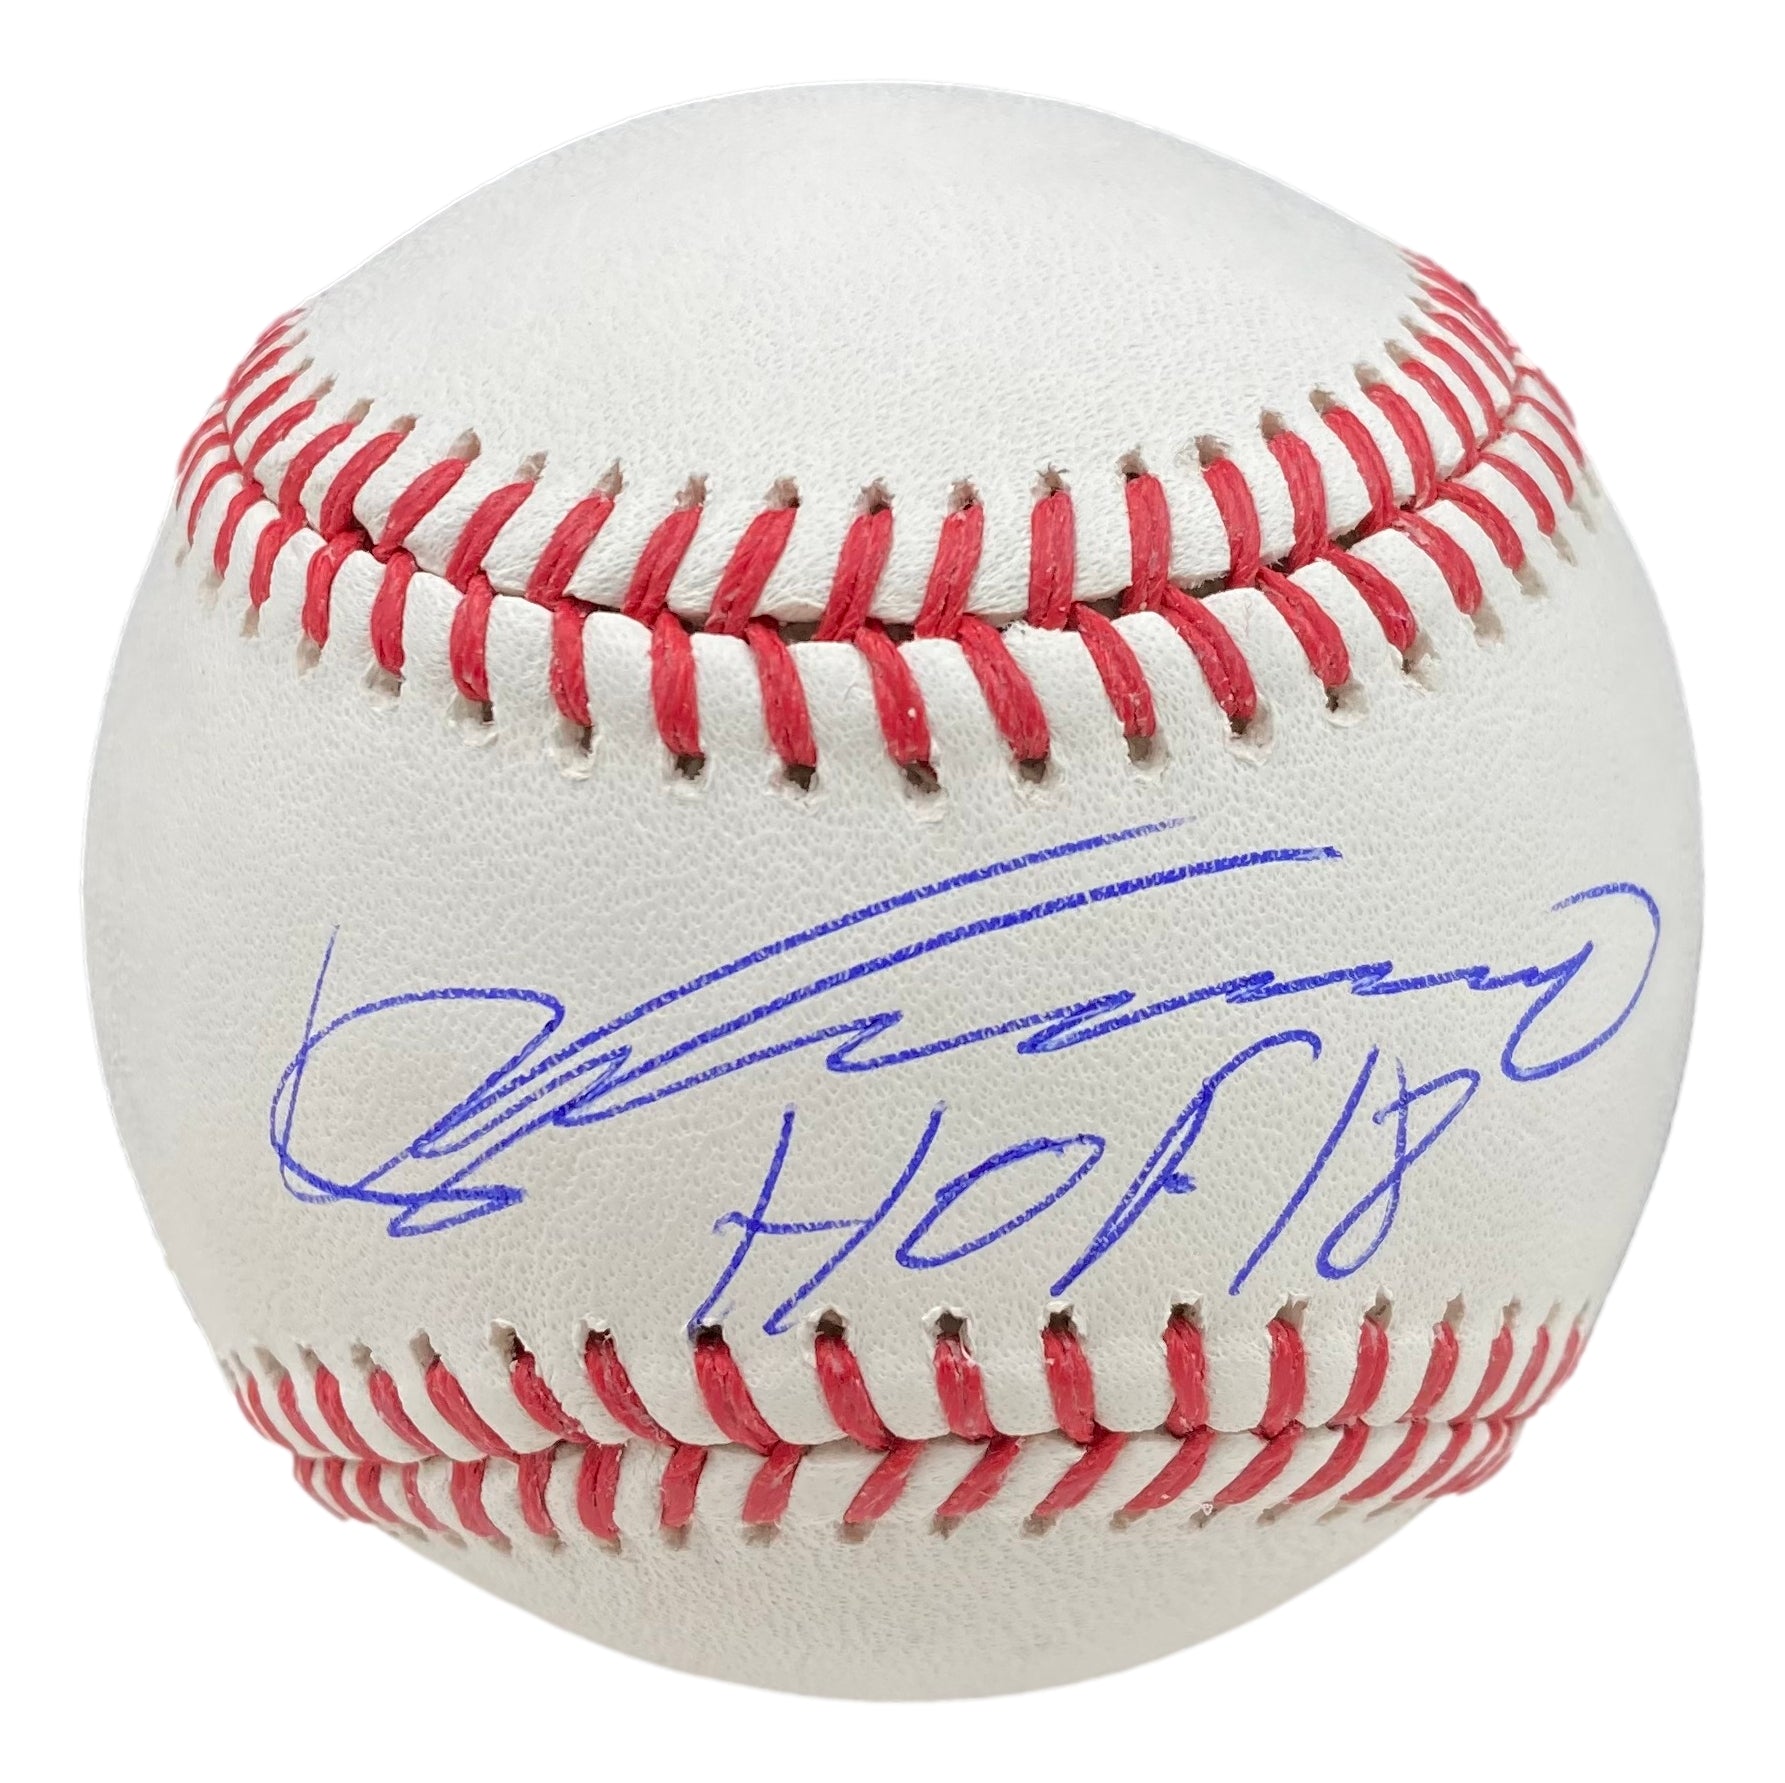 Vladimir Guerrero Jr. Autographed Ball - Official Major League